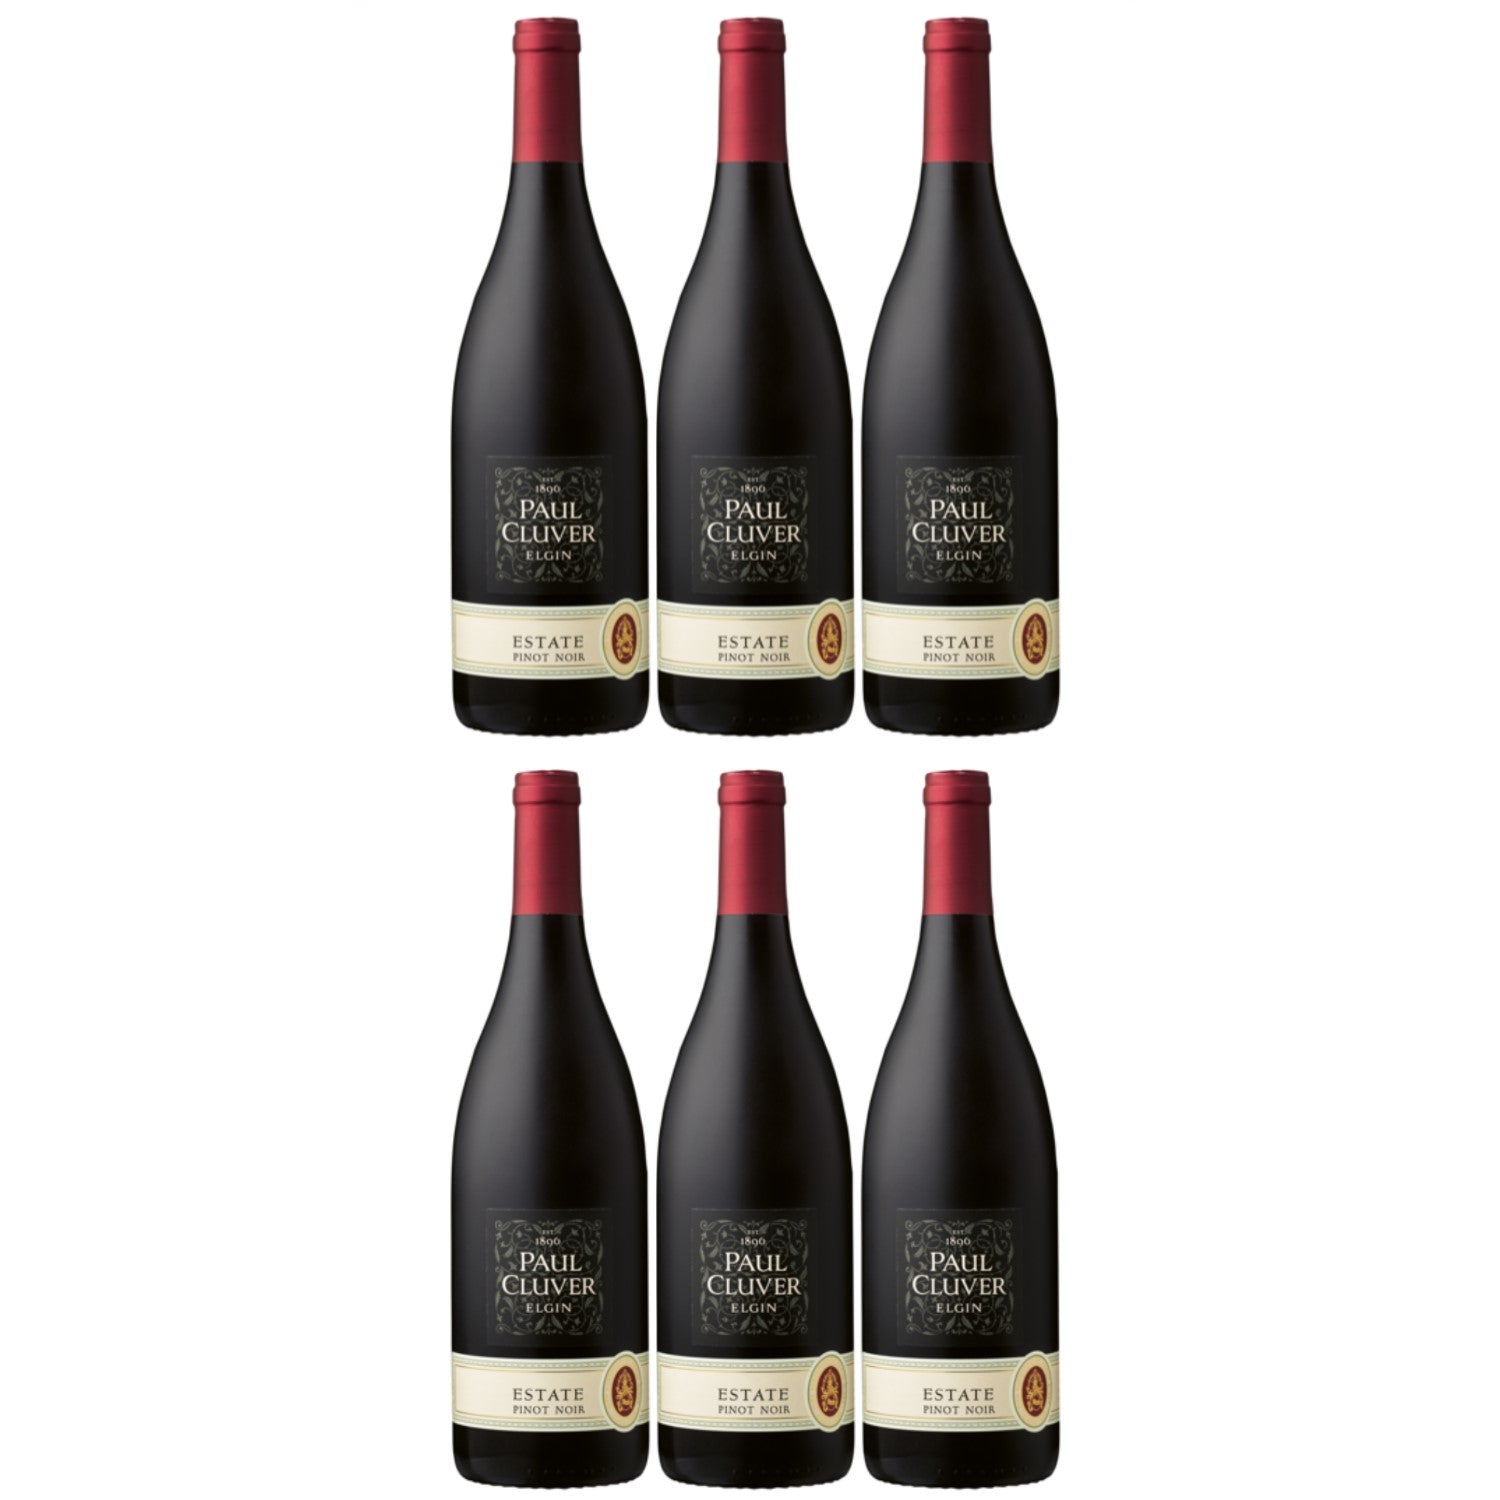 Paul Cluver Pinot Noir Estate Wine Elgin Valley Rotwein Wein trocken Südafrika (6 x 0.75l) - Versanel -